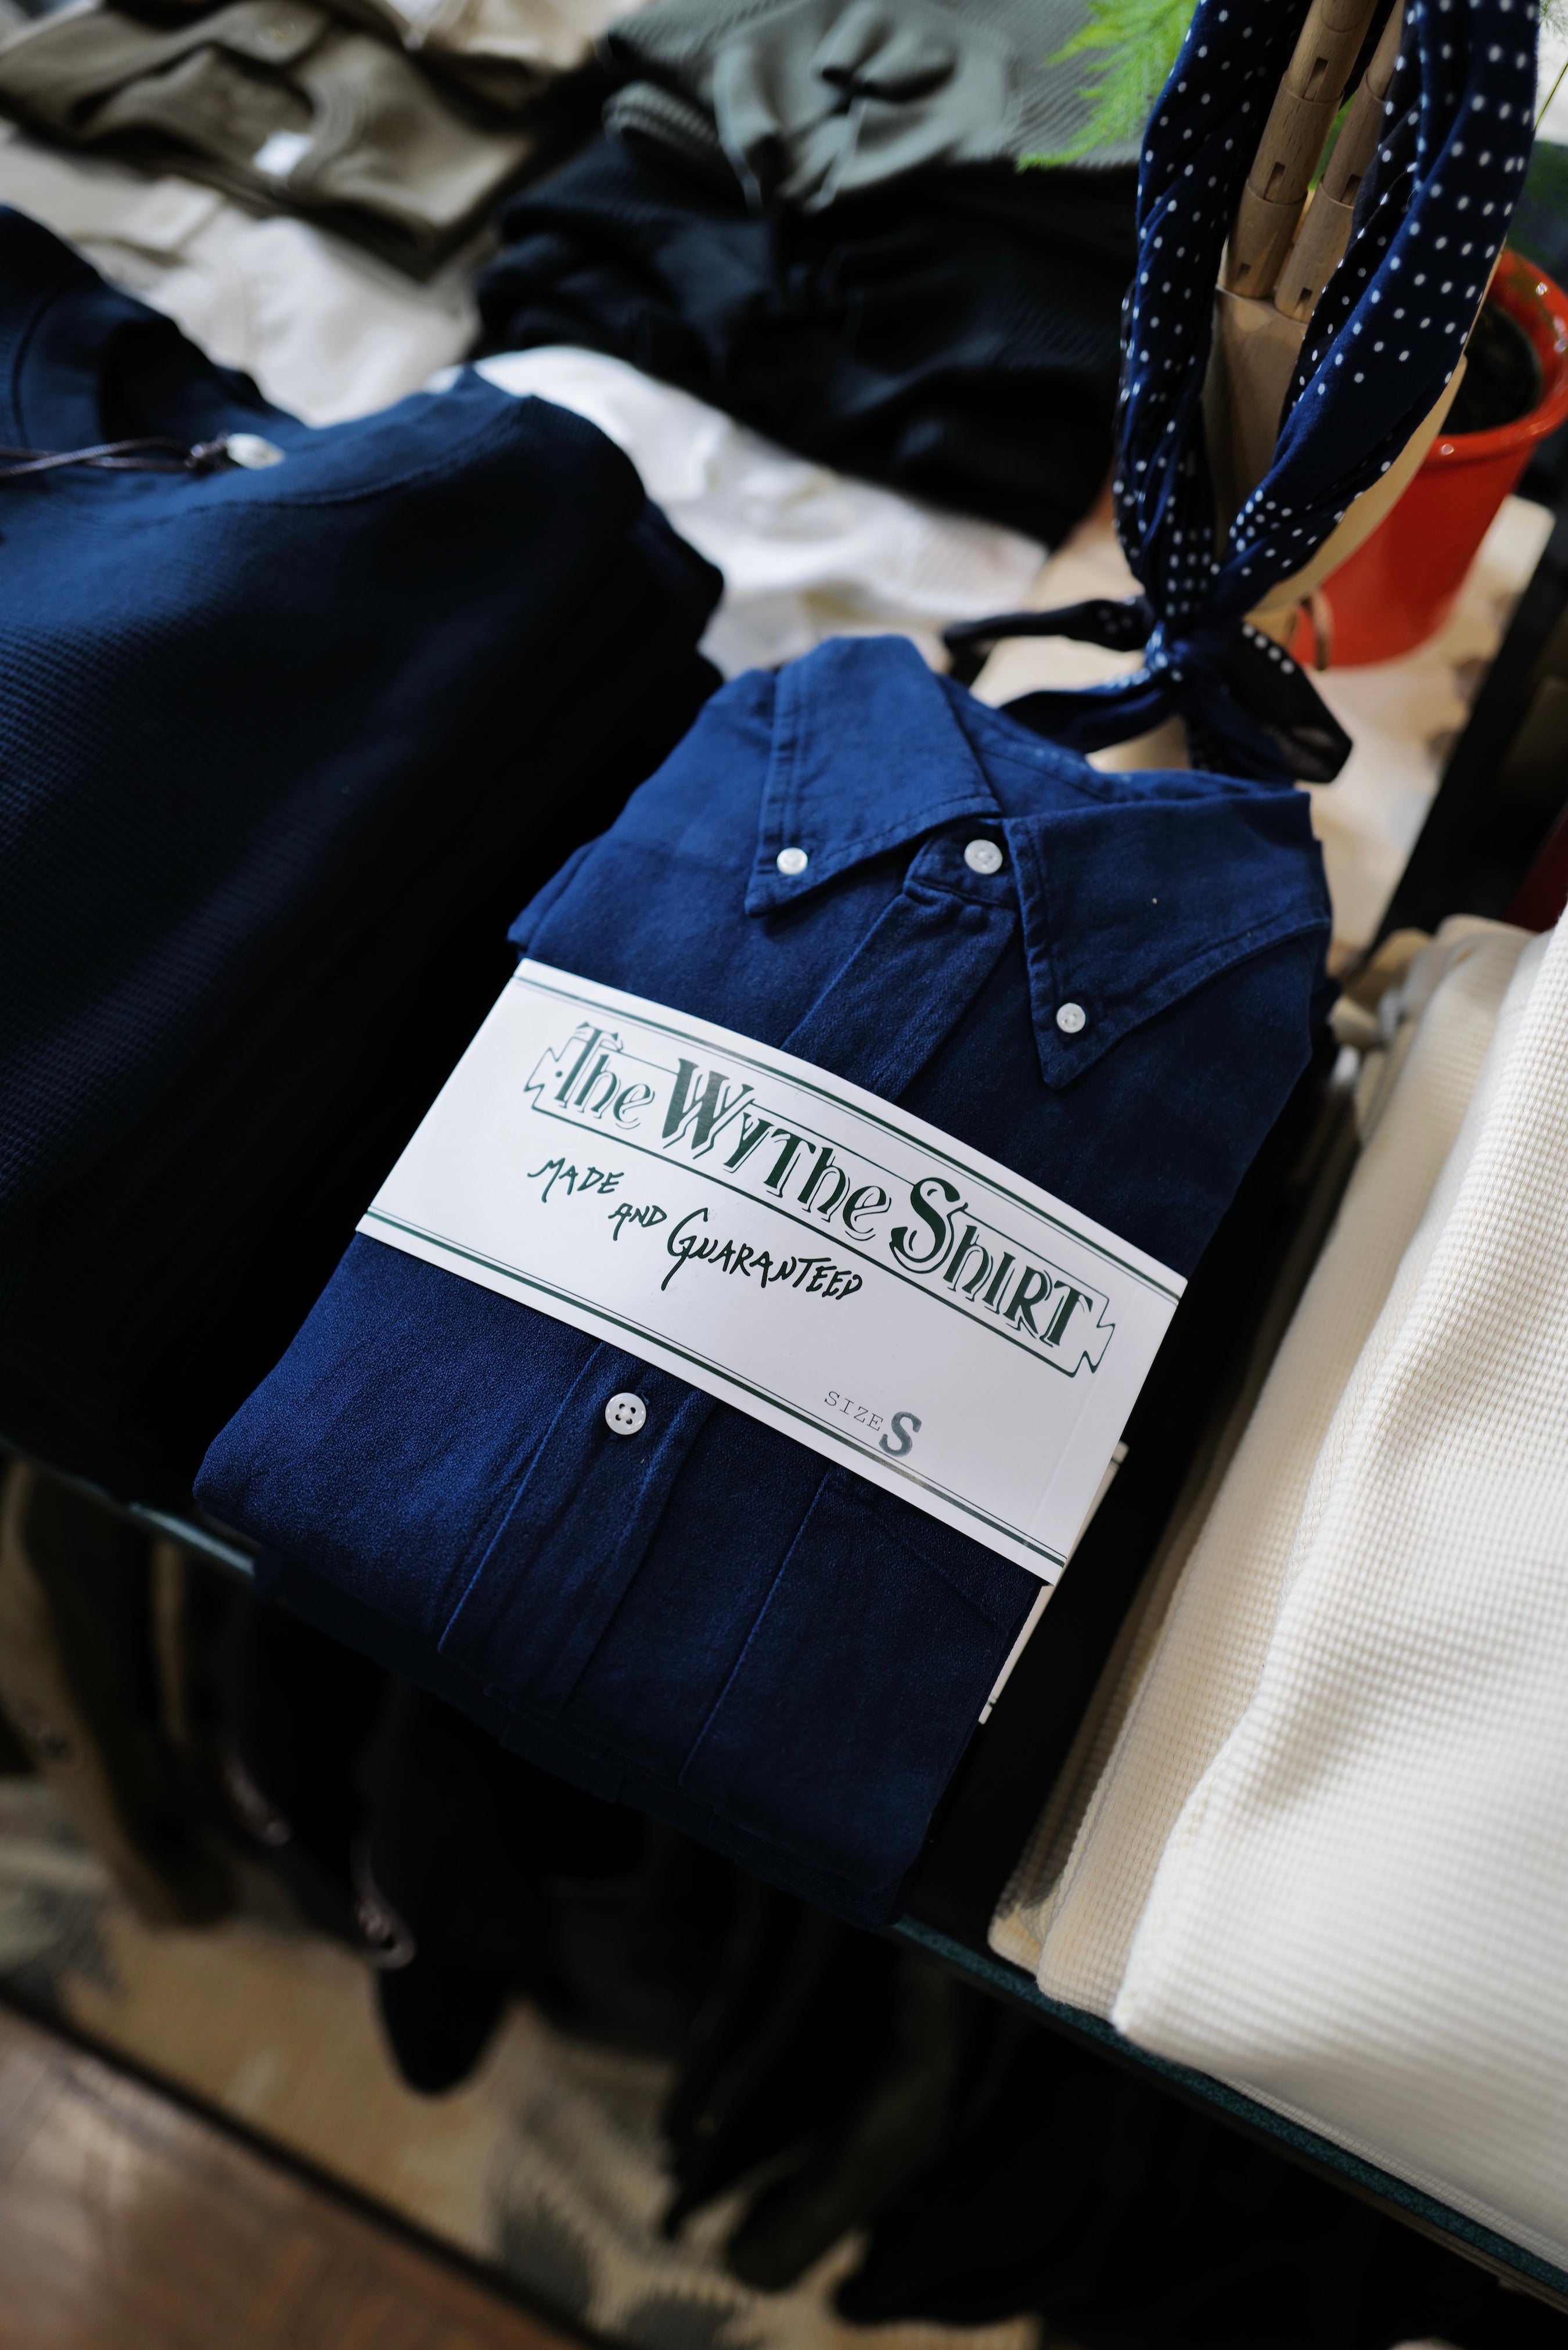 Wythe - Indigo Yarn-Dyed Sateen Button Down Shirt